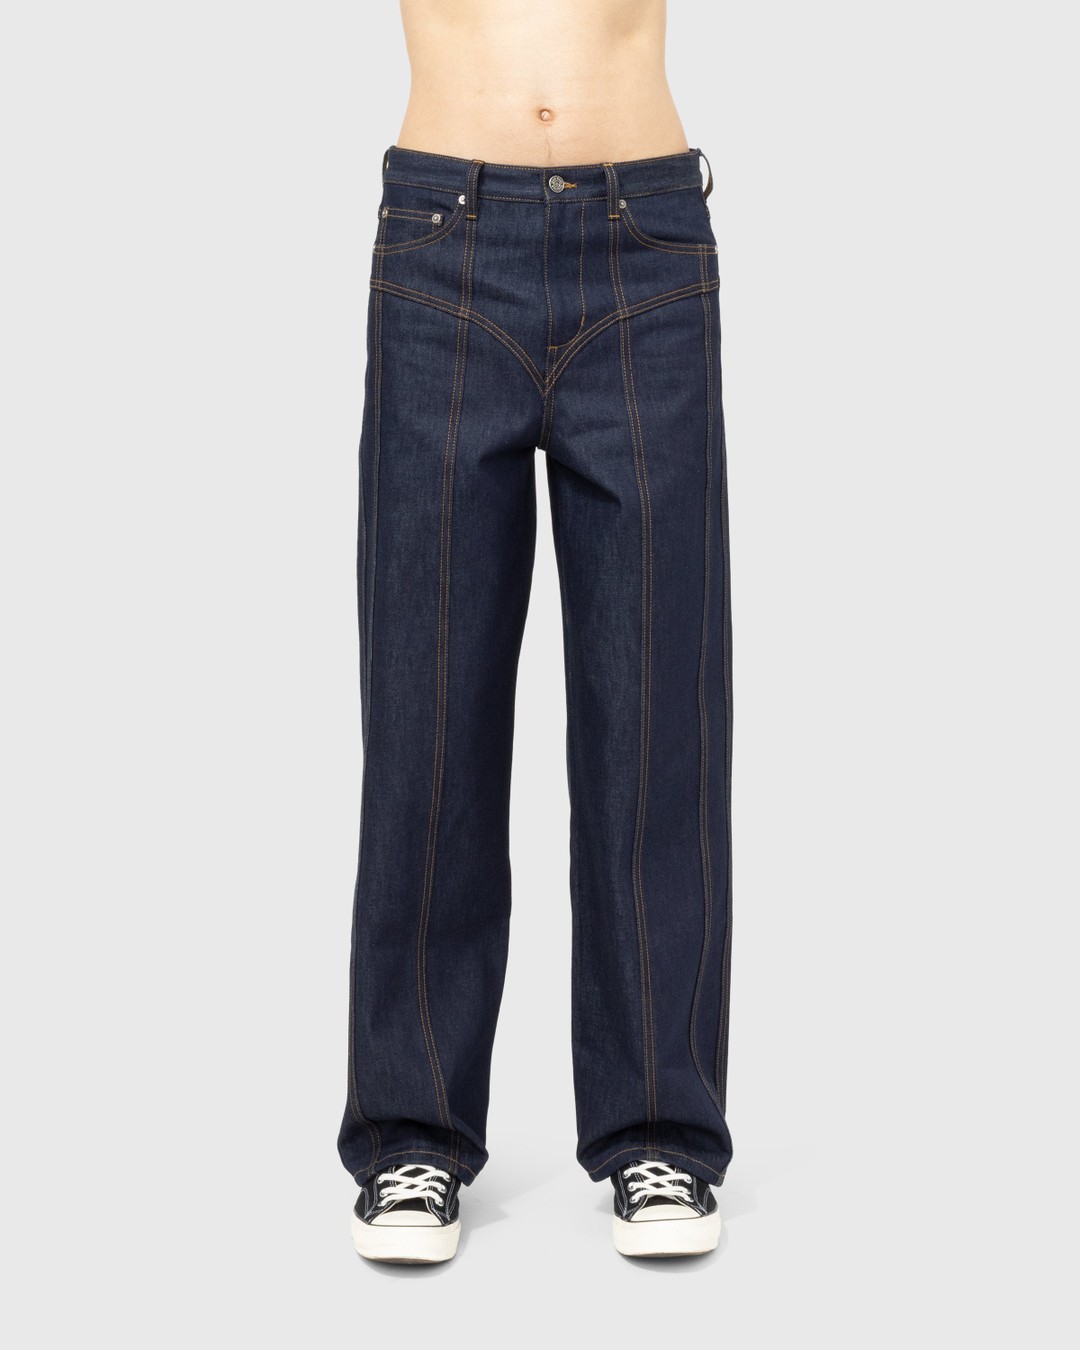 Jean Paul Gaultier – Raw Low-Rise Jeans Indigo - Denim - Blue - Image 3